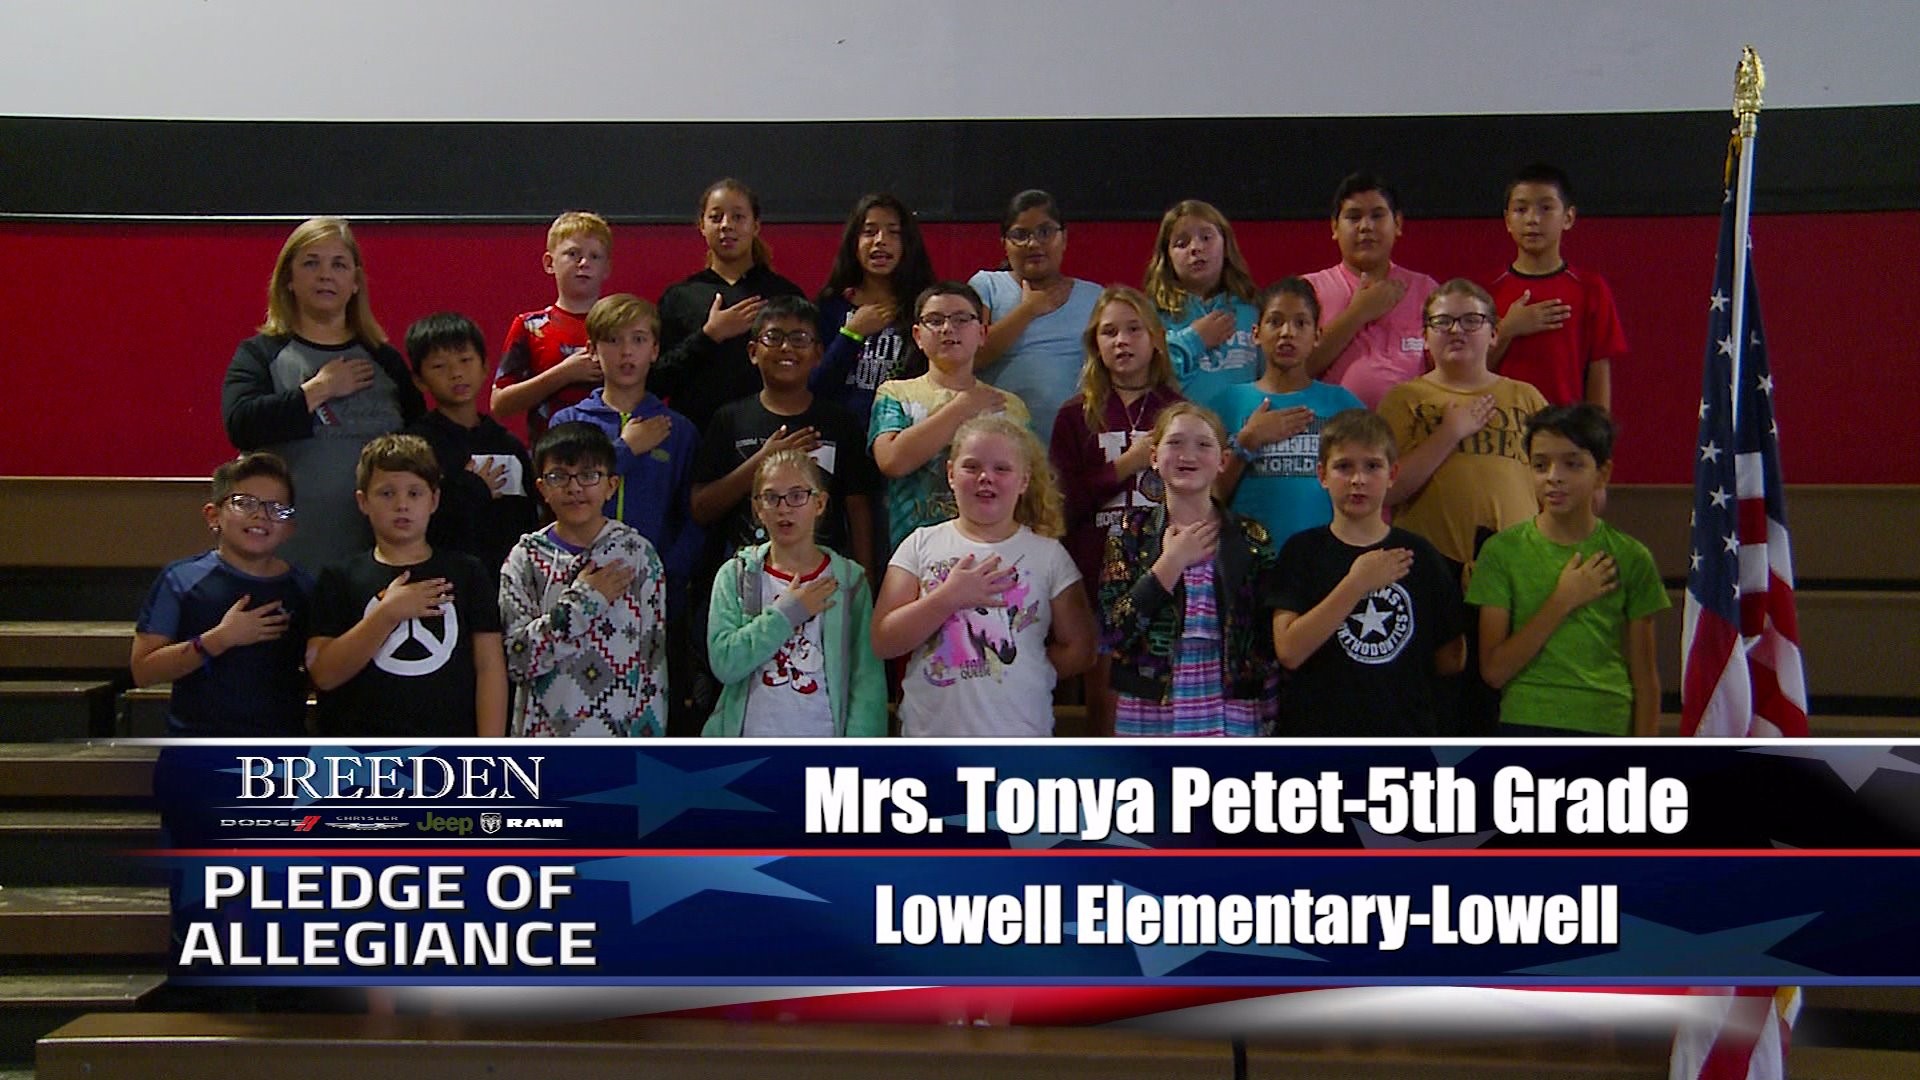 Mrs. Tonya Petet  5th Grade Lowell Elementary, Lowell